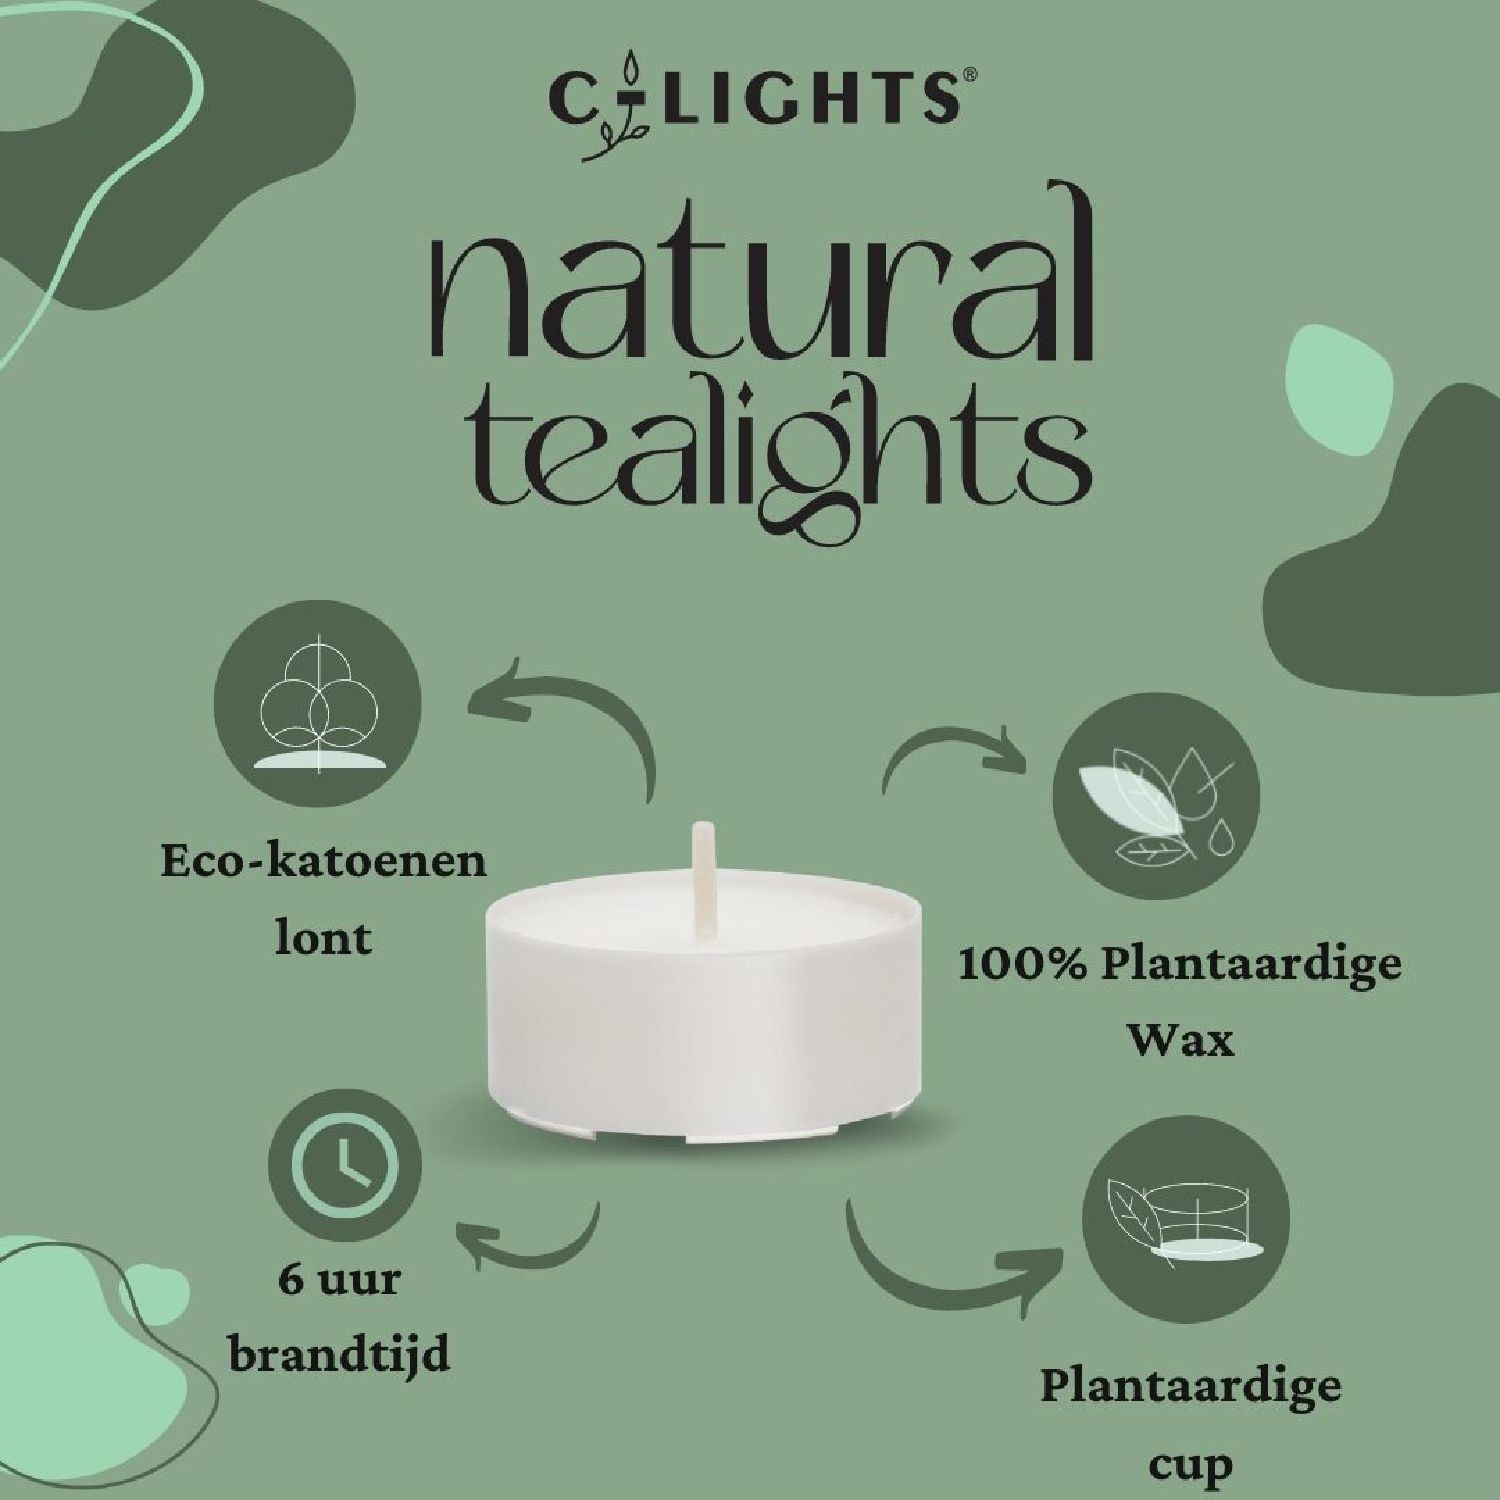 C-lights Natural Tealights | R. Knijnenburg